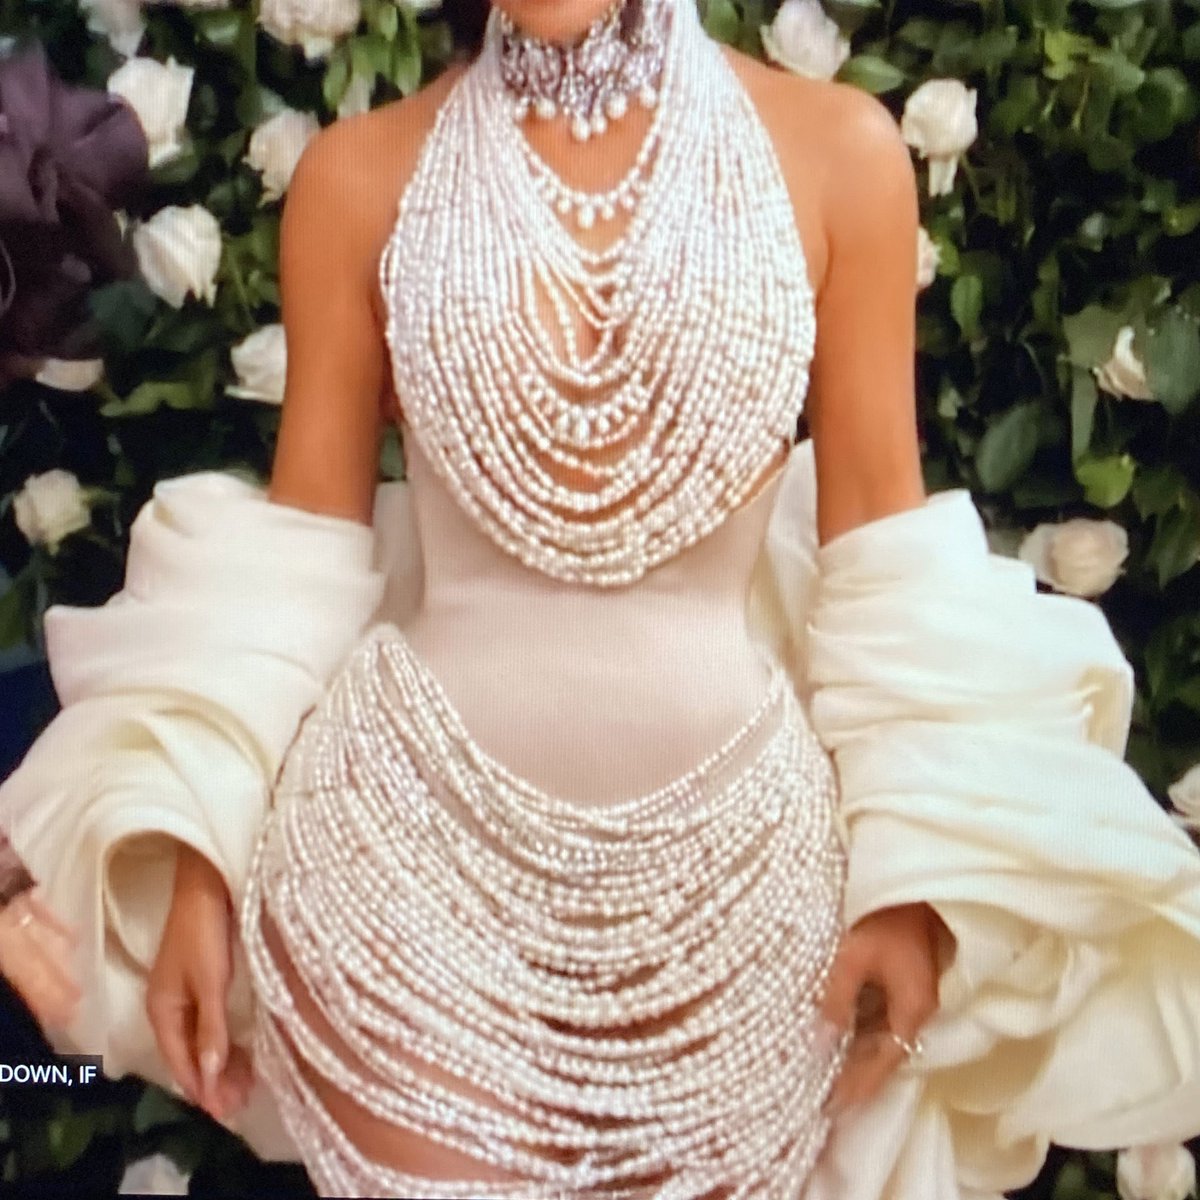 Kim Kardashian at the #MetGala wearing Schiaparelli